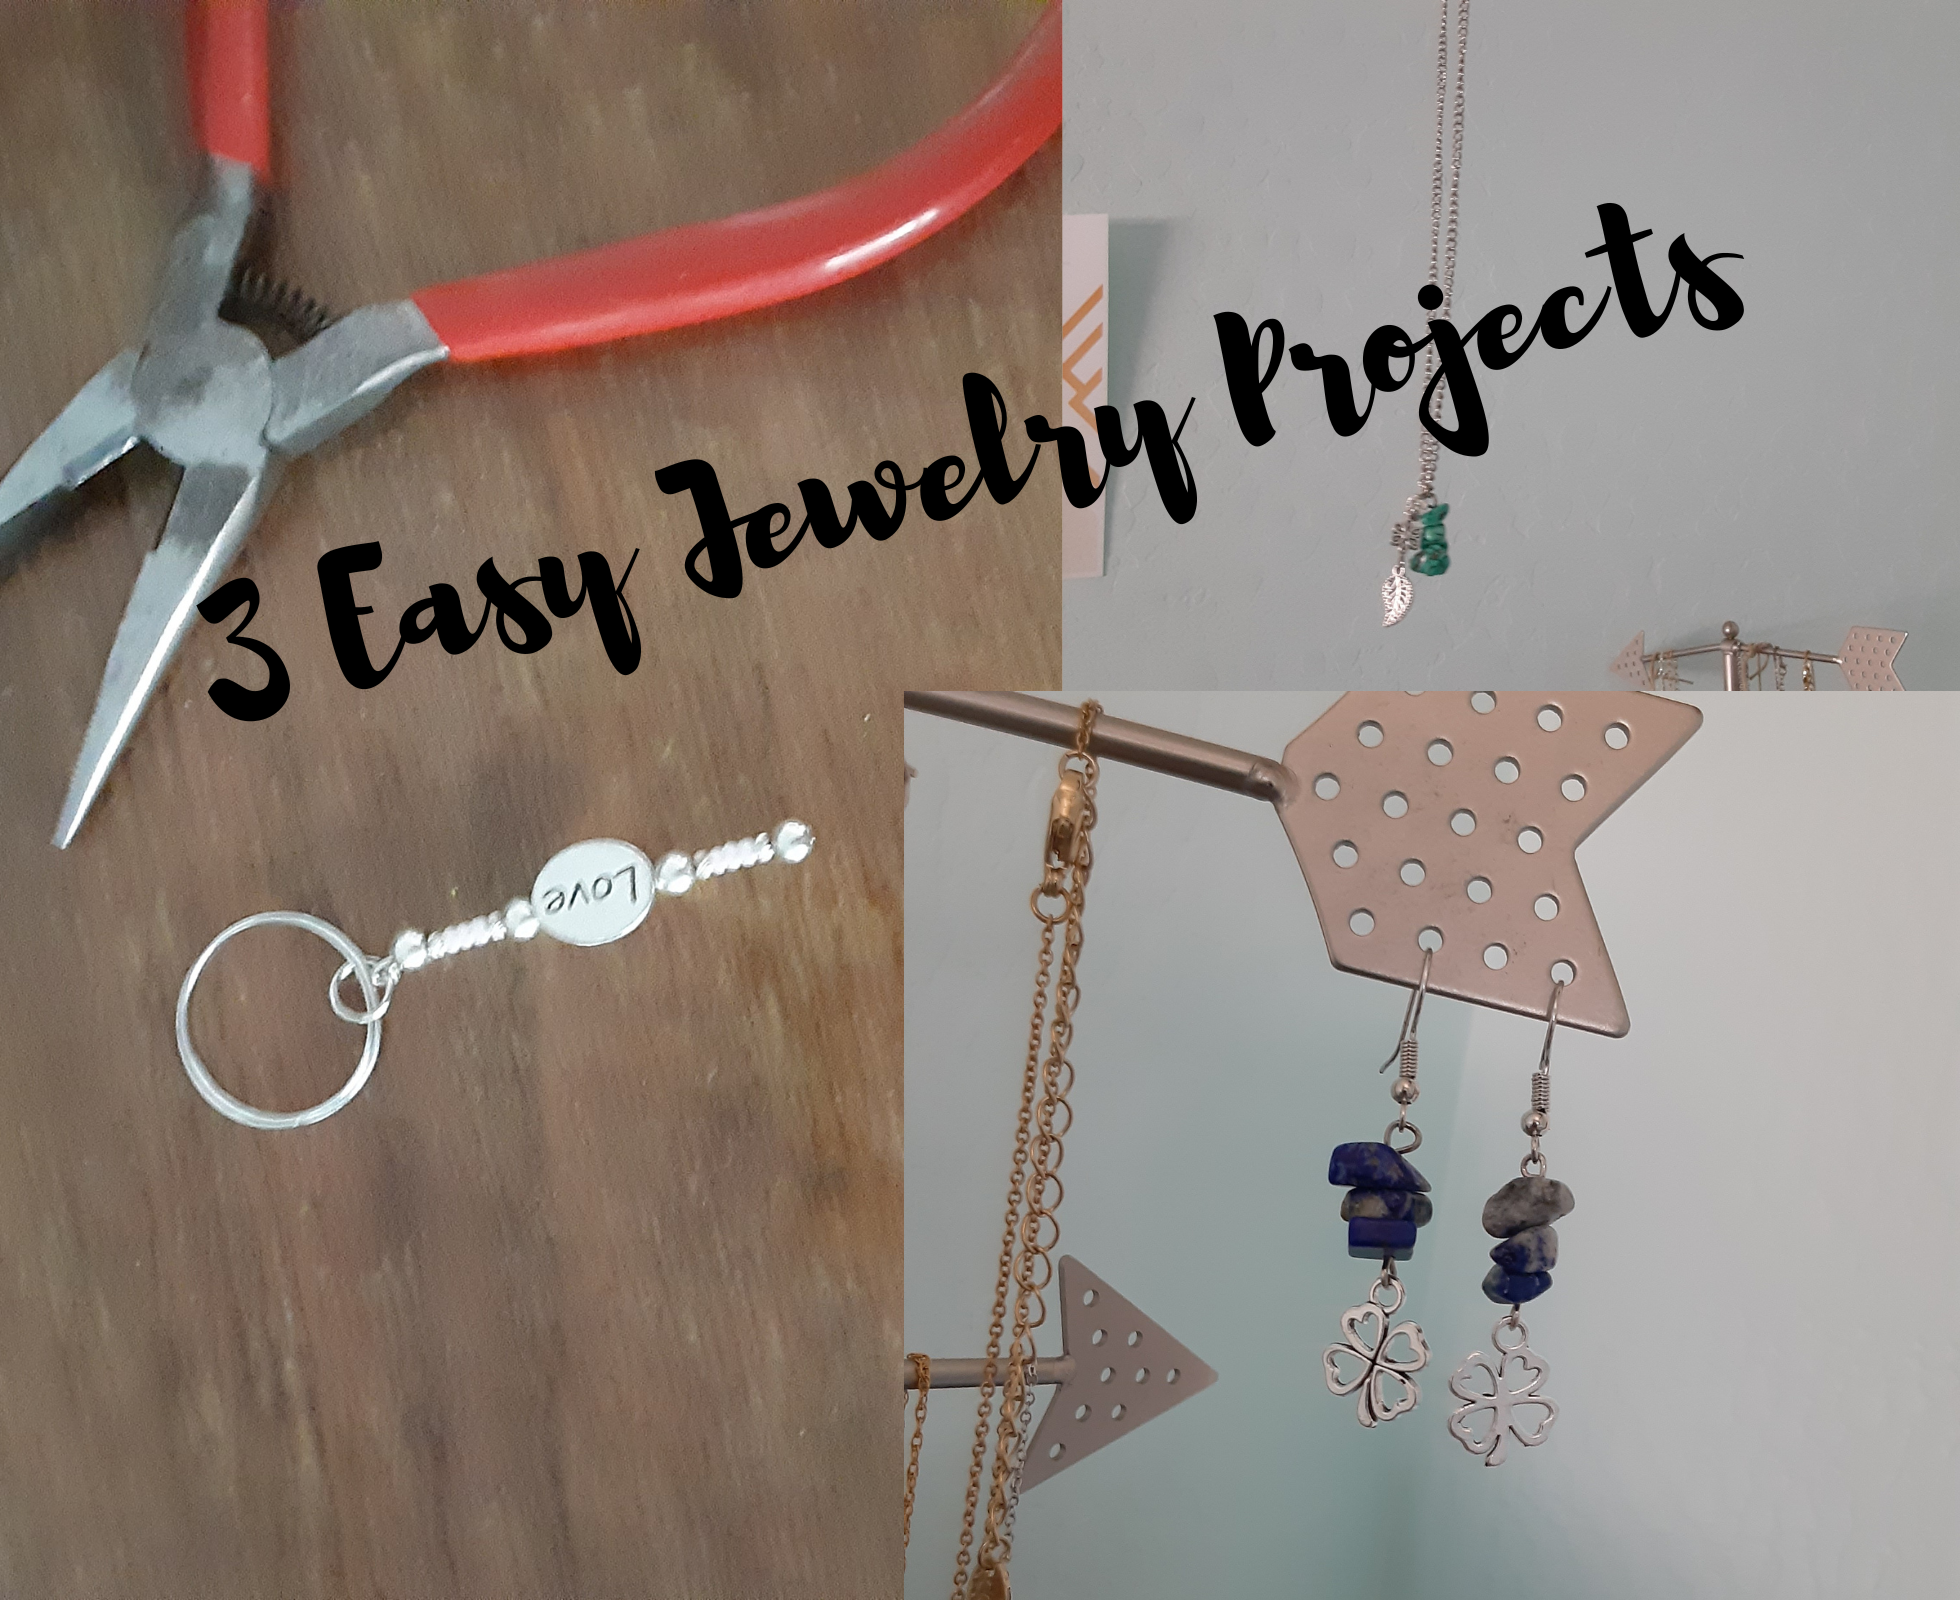 3 Easy Jewelry Pieces